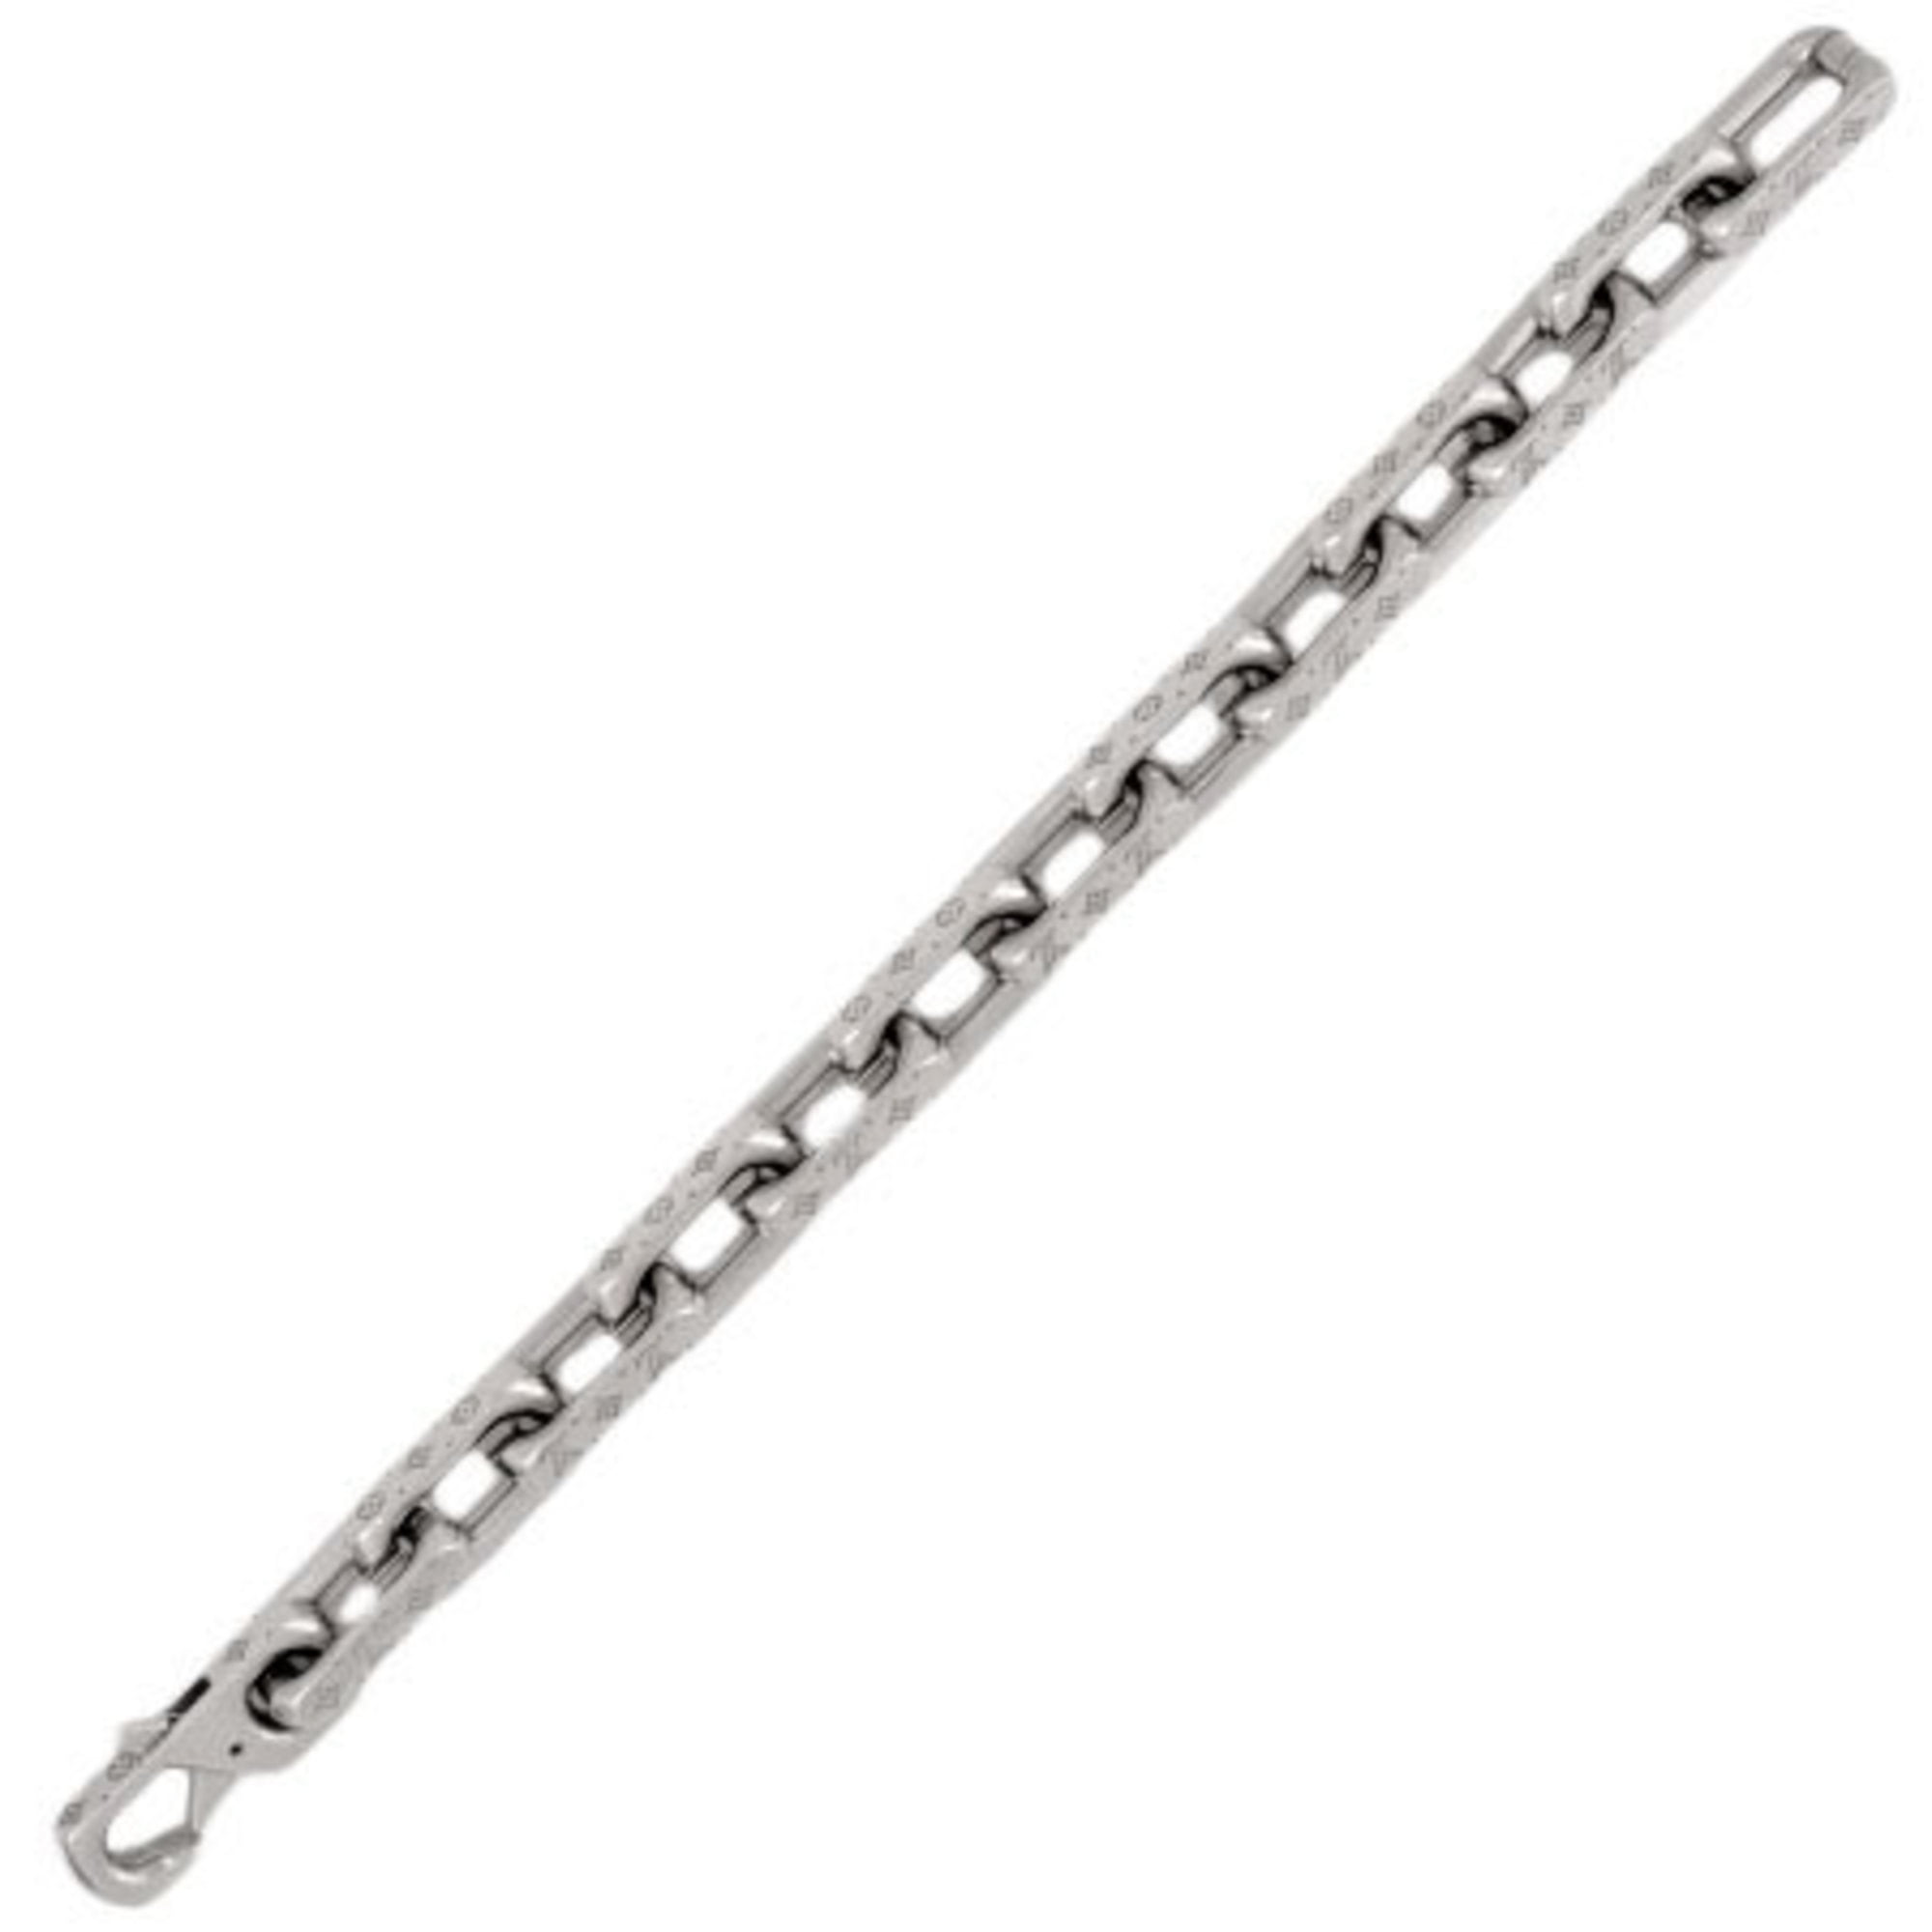 Monogram bracelet Louis Vuitton Silver in Metal - 30833516